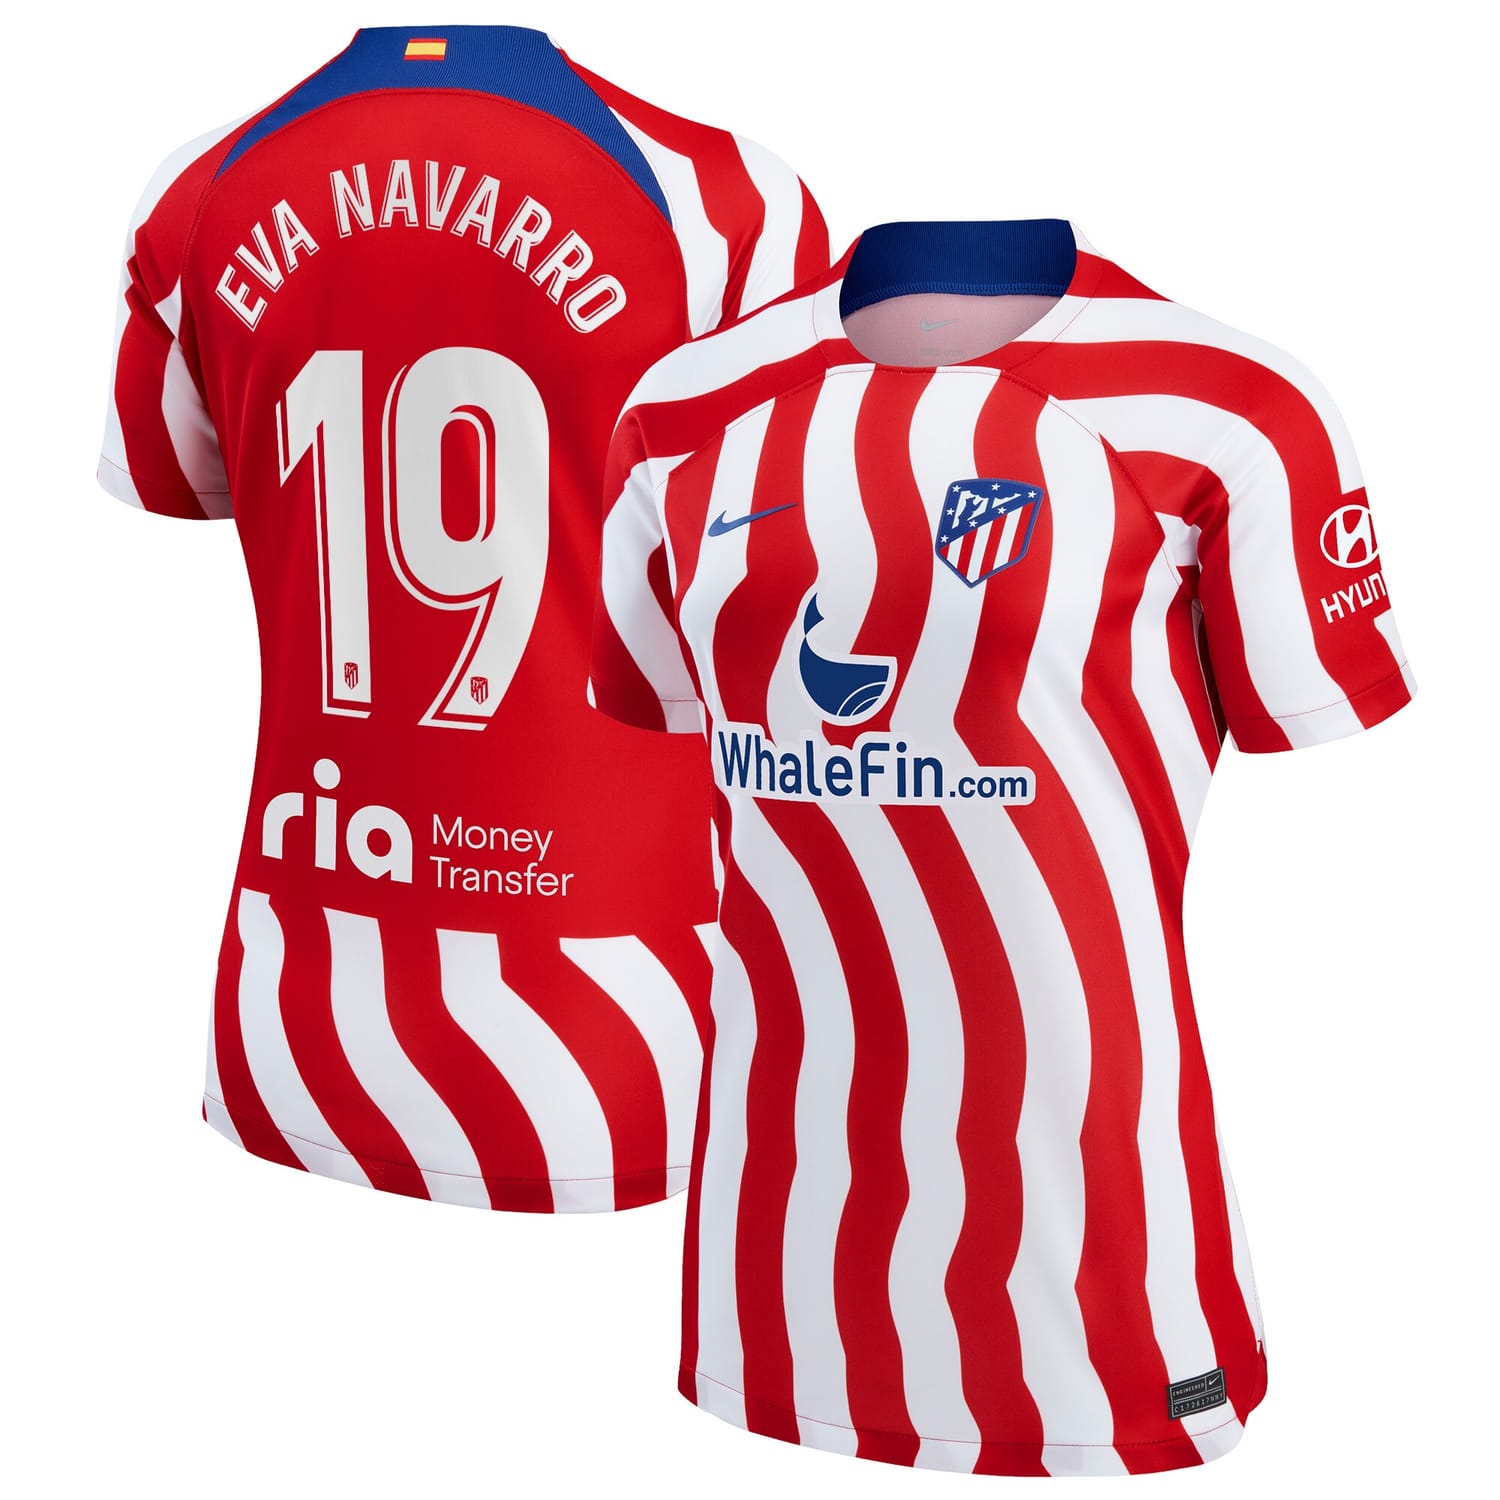 La Liga Atletico de Madrid Home Jersey Shirt 2022-23 player Eva Navarro 19 printing for Women